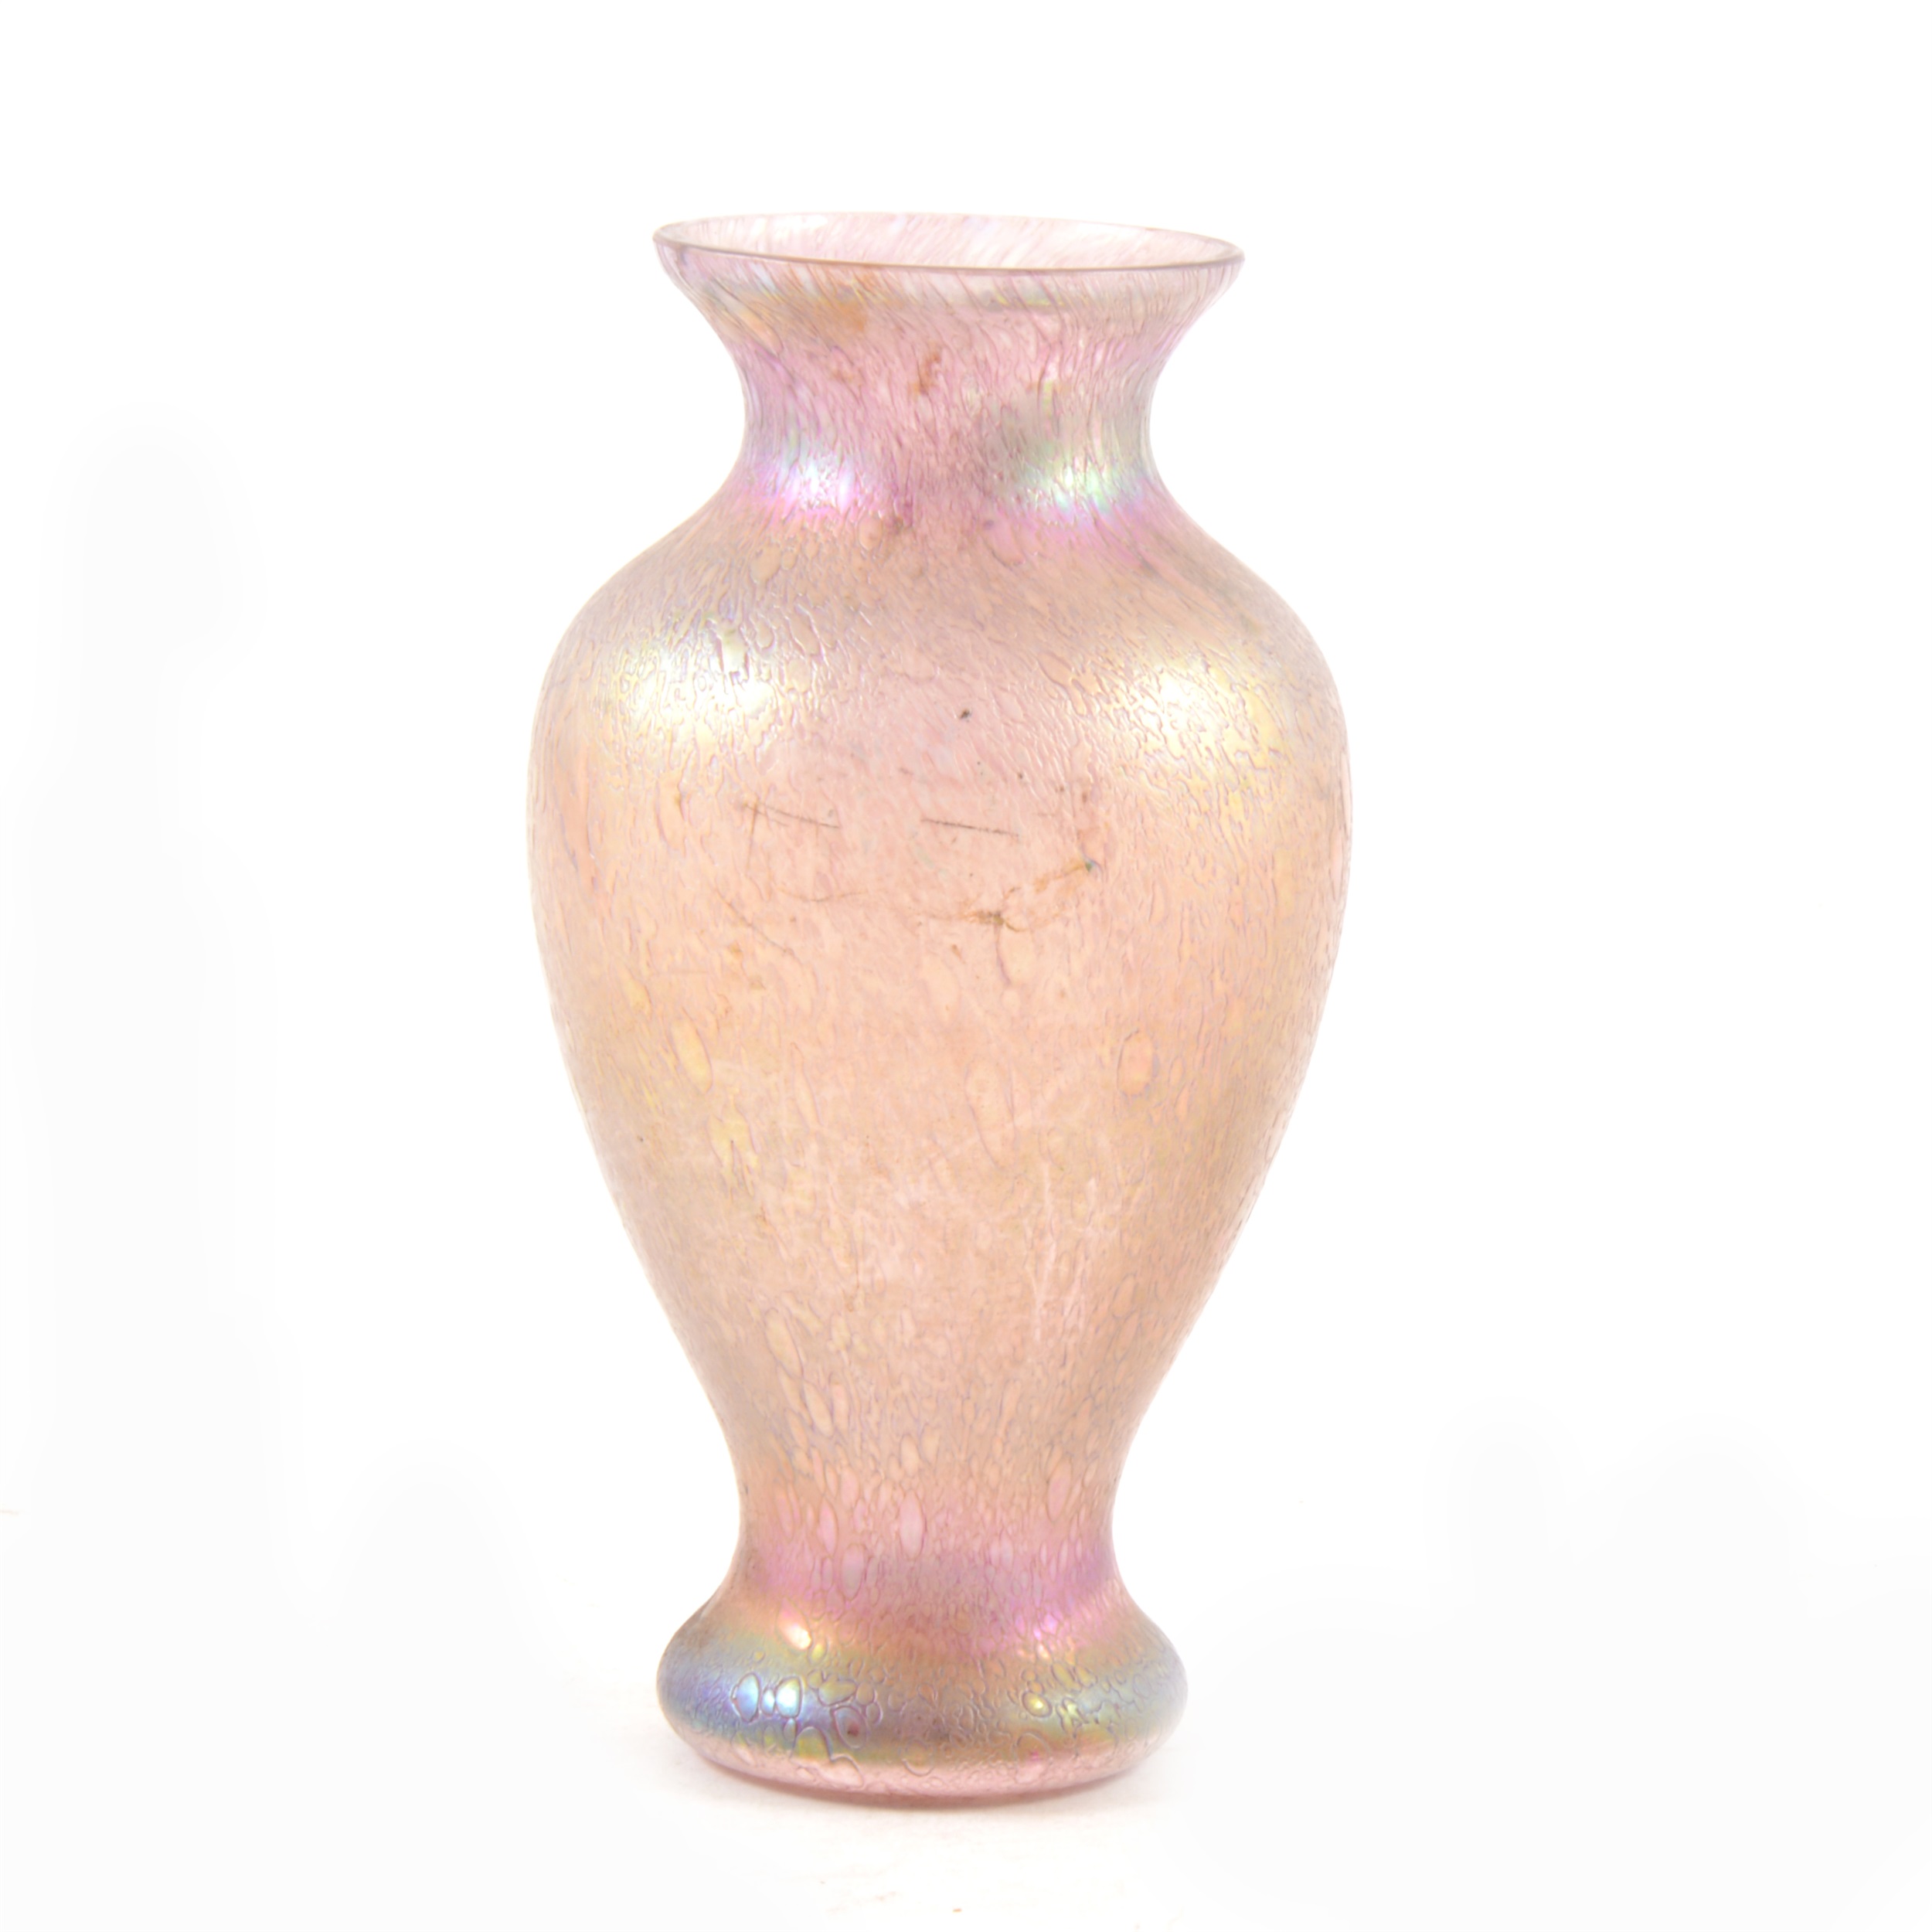 An iridescent glass vase, Loetz style